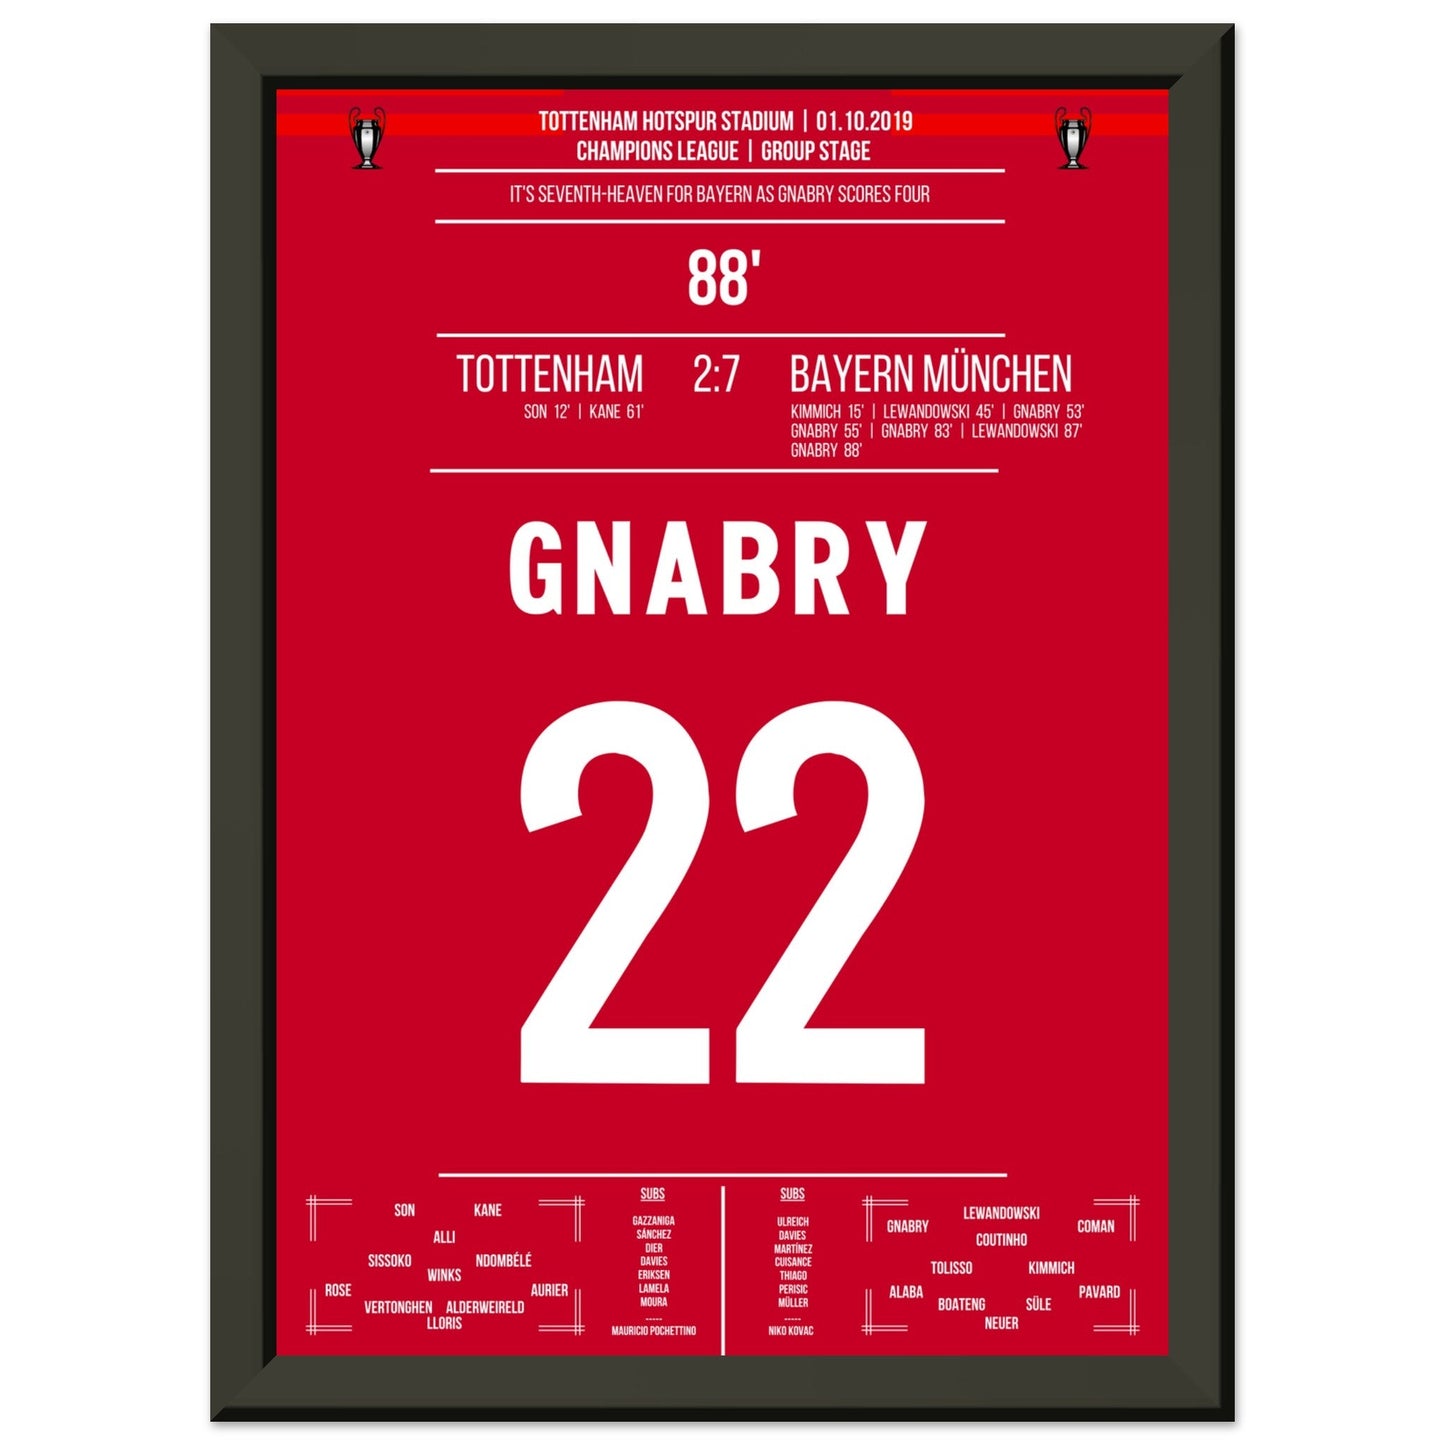 4-Tore-Gnabry gegen Tottenham 2019